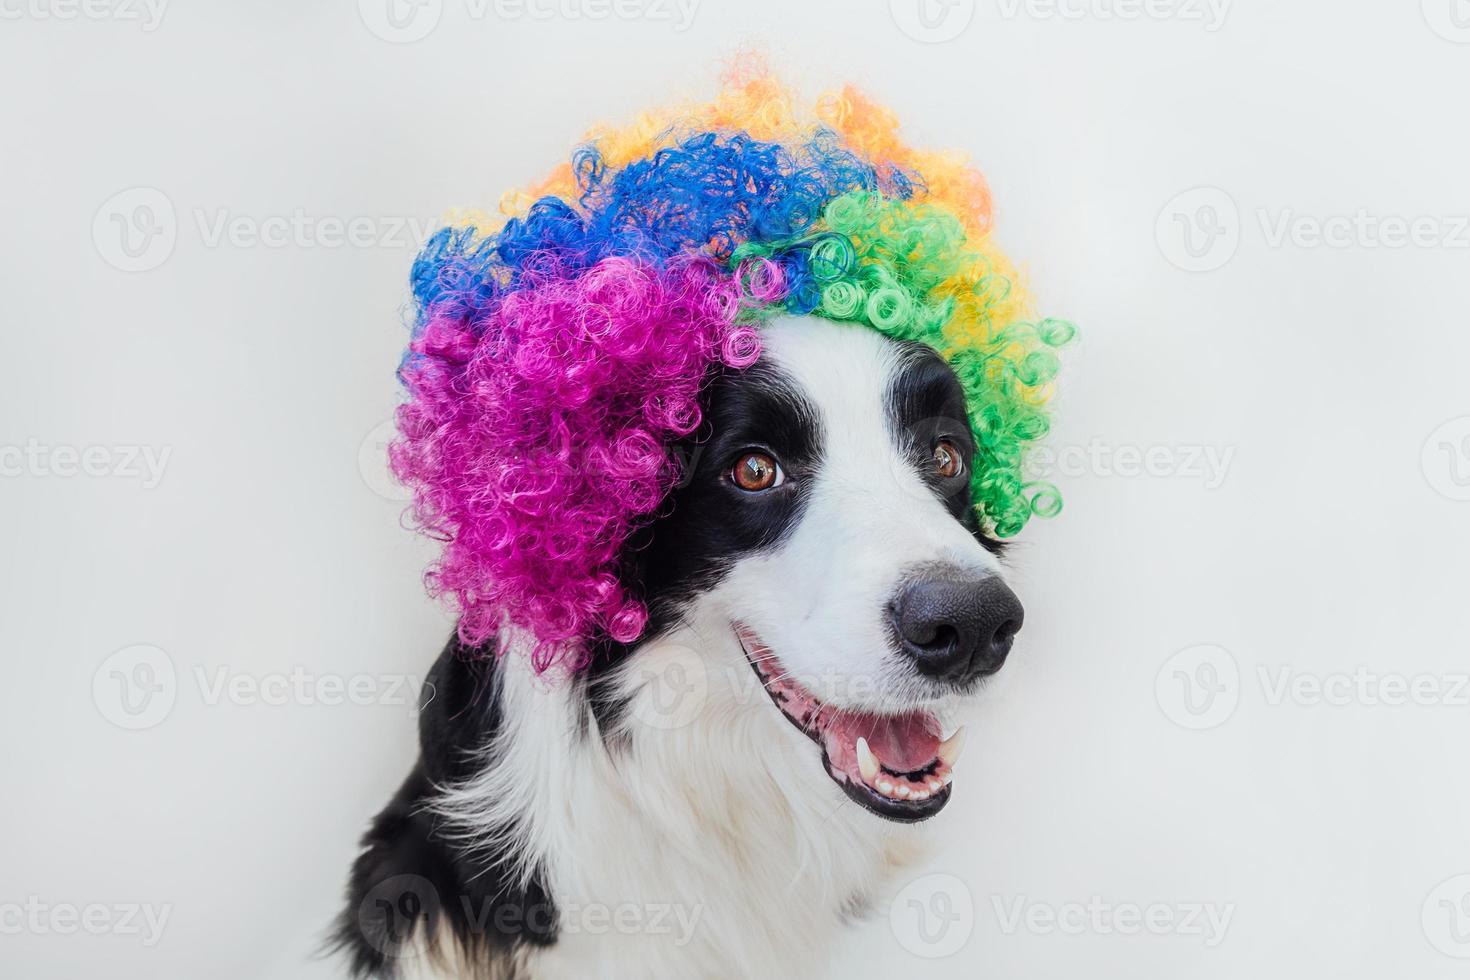 lindo cachorro de perro con cara graciosa border collie usando peluca de payaso rizado colorido aislado sobre fondo blanco. retrato de perro divertido disfrazado de payaso en carnaval o fiesta de halloween. perro mascota en el circo. foto